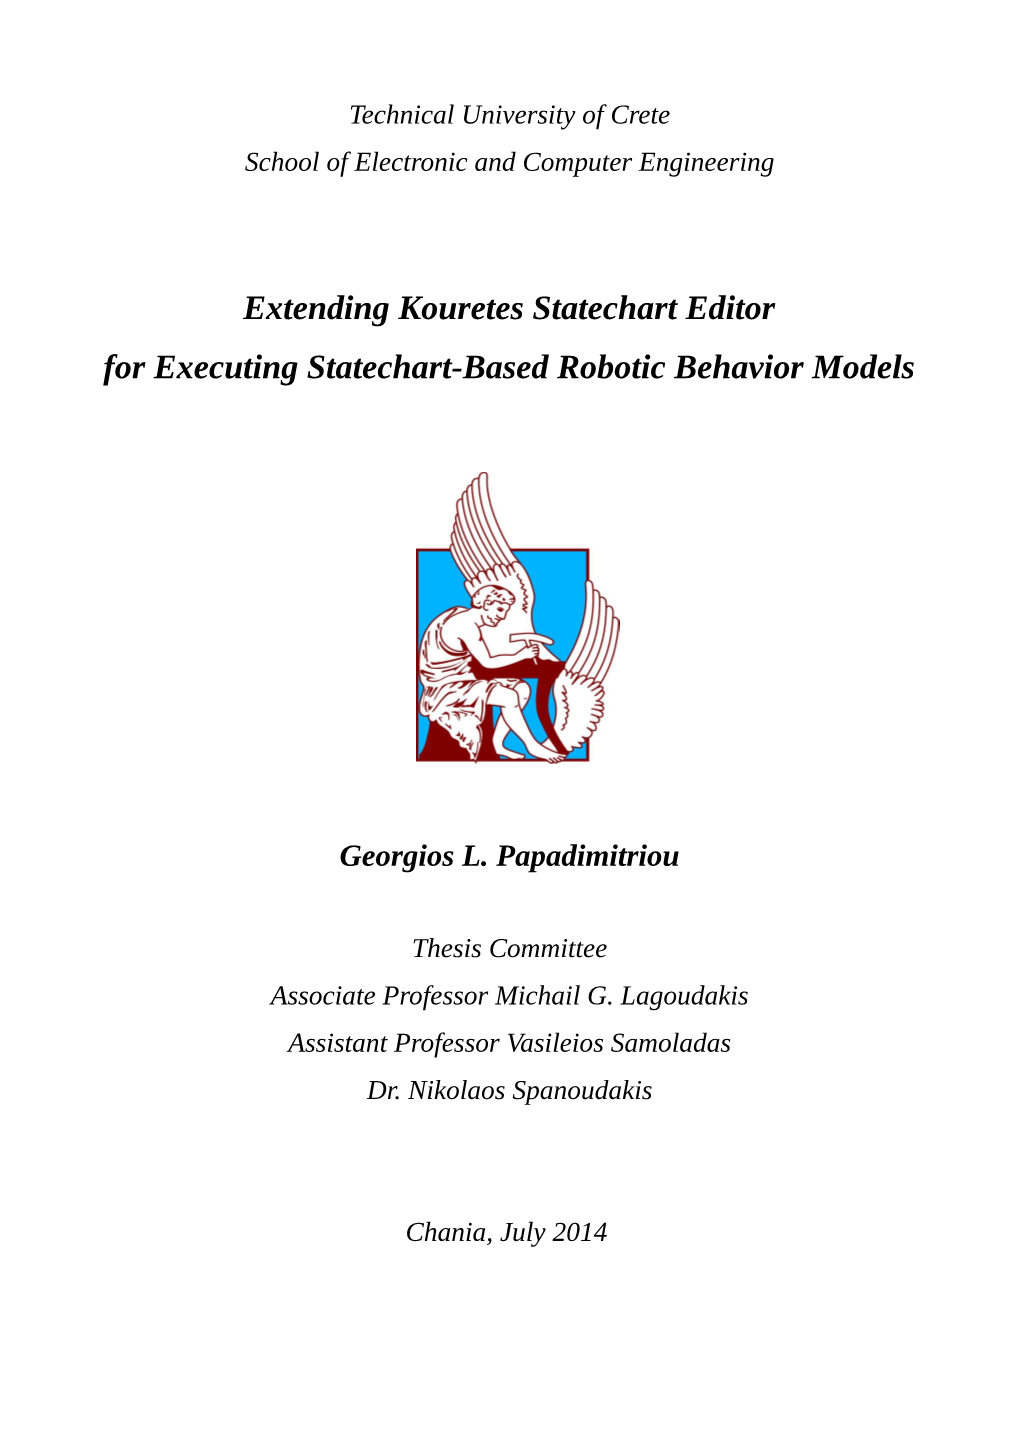 Extending Kouretes Statechart Editor for Executing Statechart-Based Robotic Behavior Models